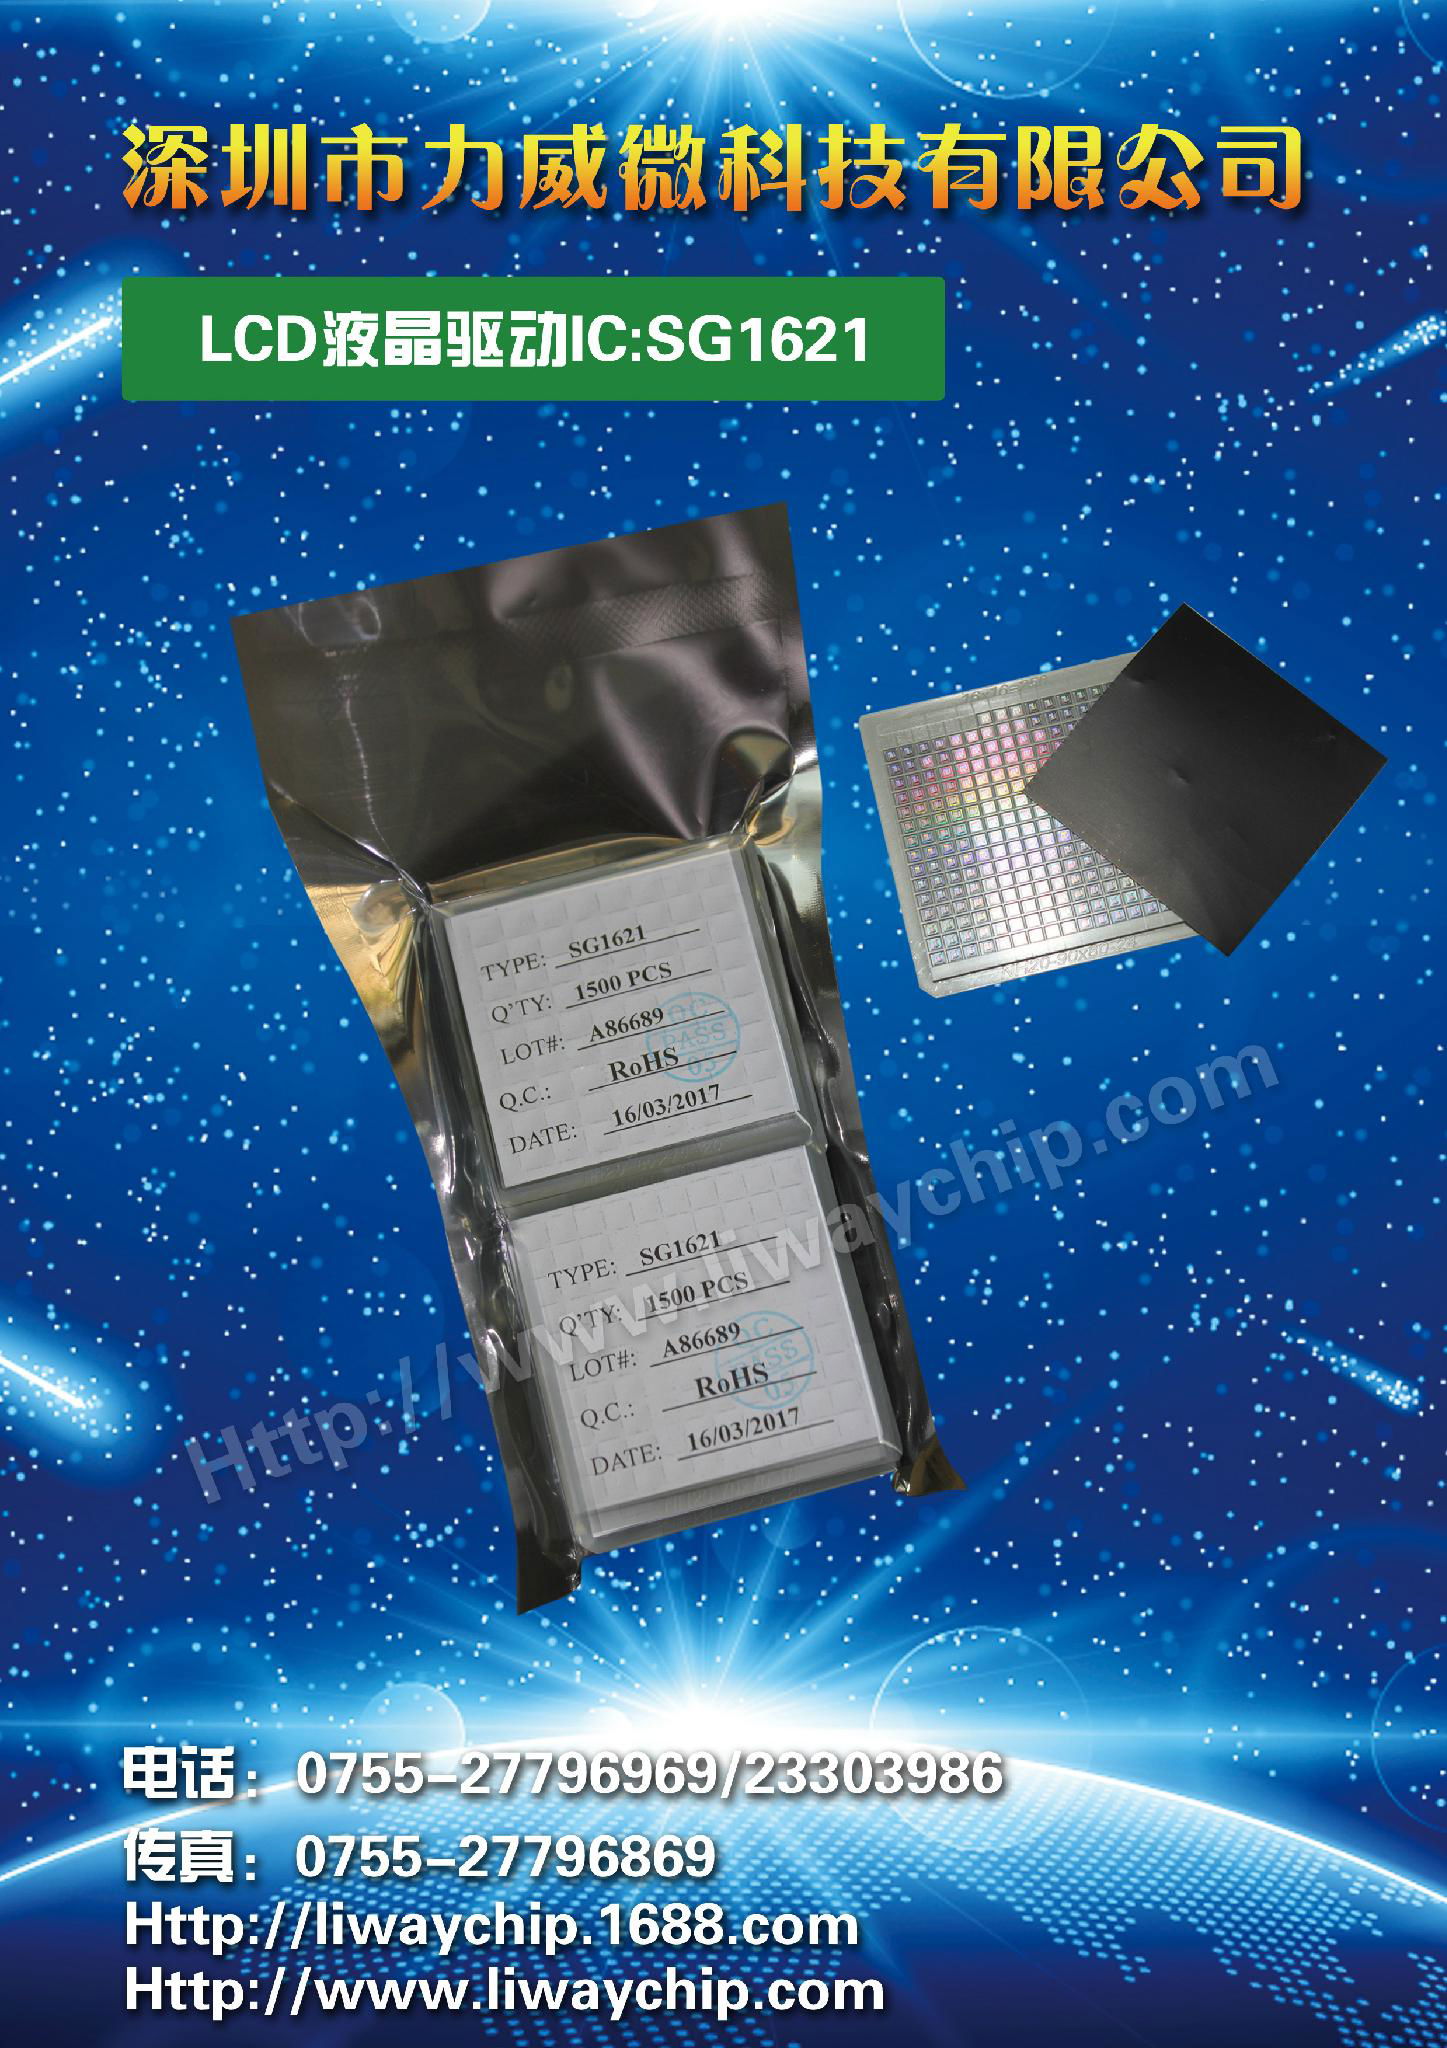 LCD液晶驅動IC  SG1621 DICE  3